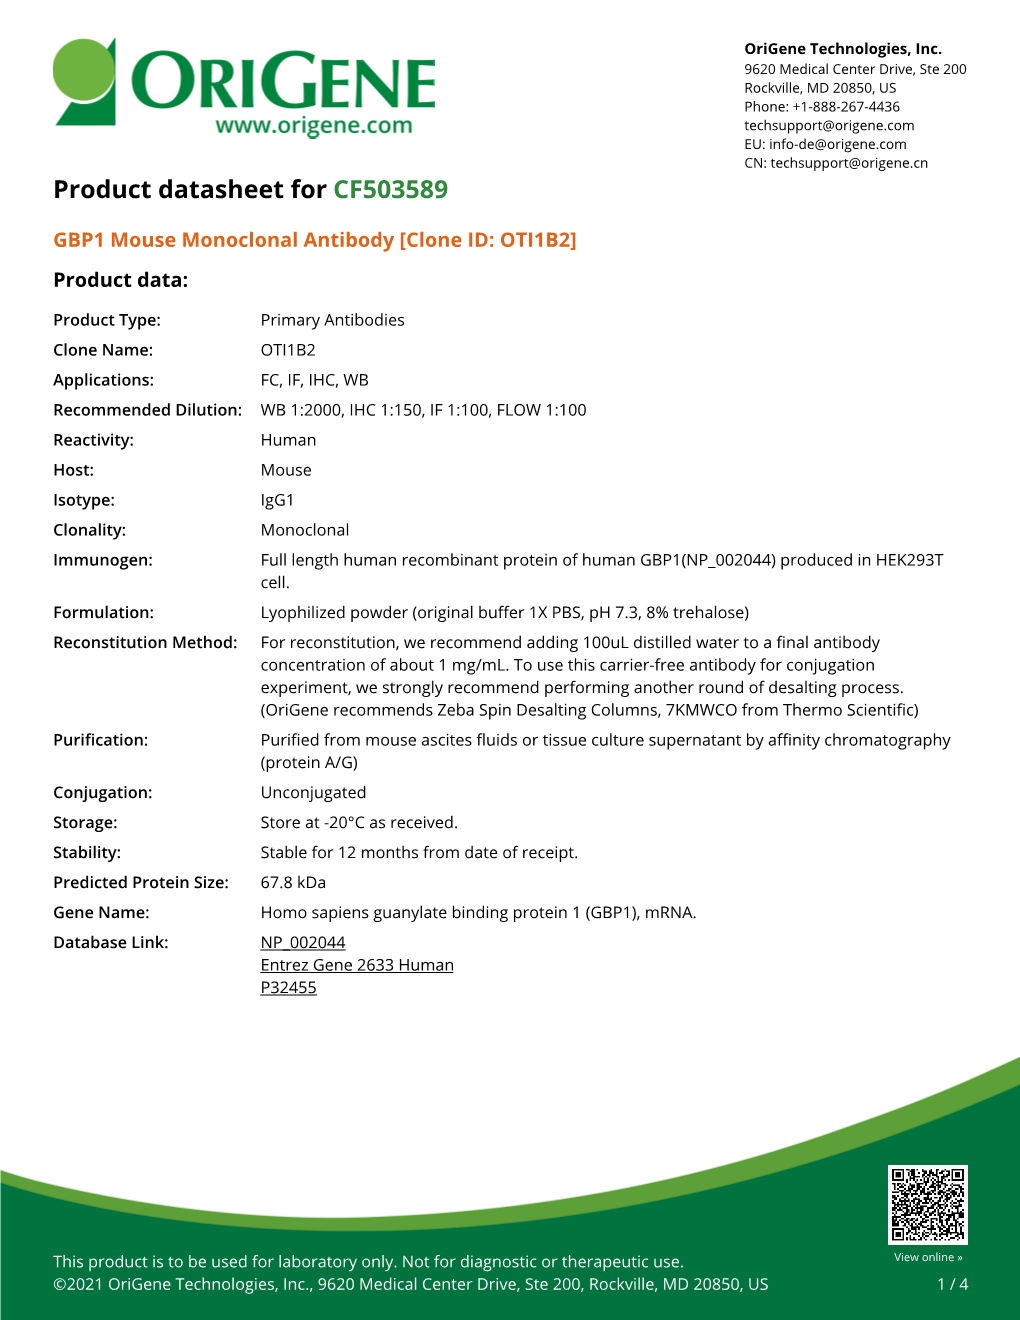 GBP1 Mouse Monoclonal Antibody [Clone ID: OTI1B2] Product Data